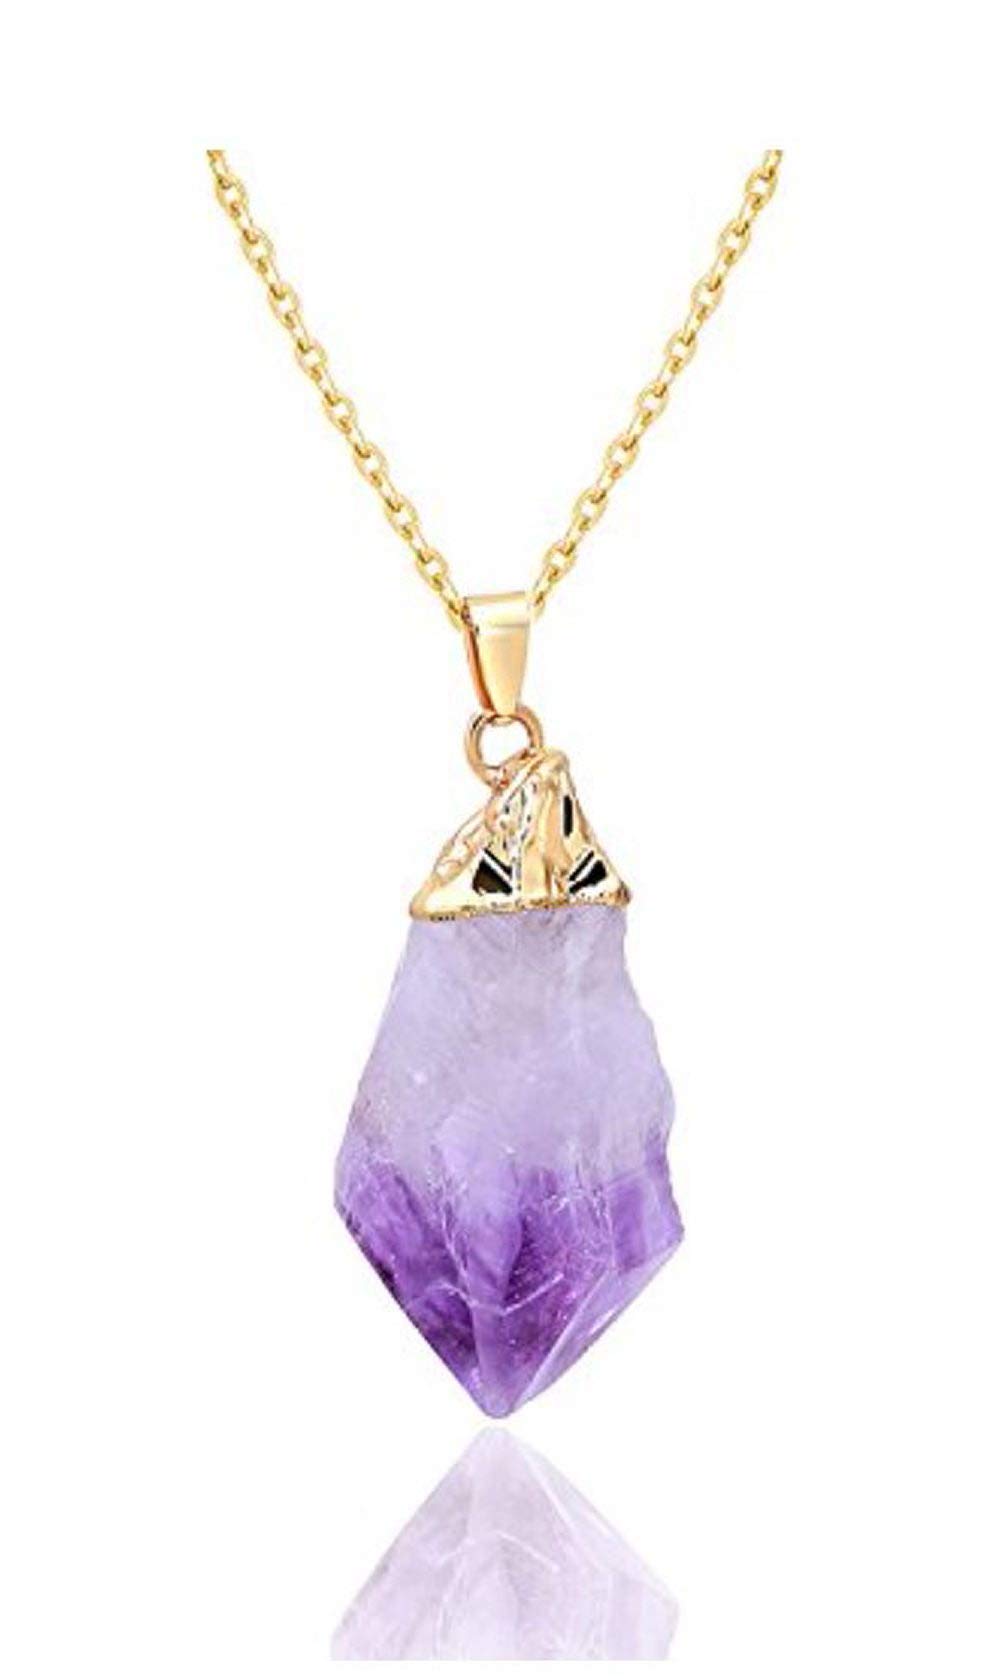 1pc Natural Raw Purple Amethyst Gemstone Necklace 18 inch Free Form Rough Healing Crystal Stone Chakra Stone Hypoallergenic Tarnish Resistant Women Jewellery